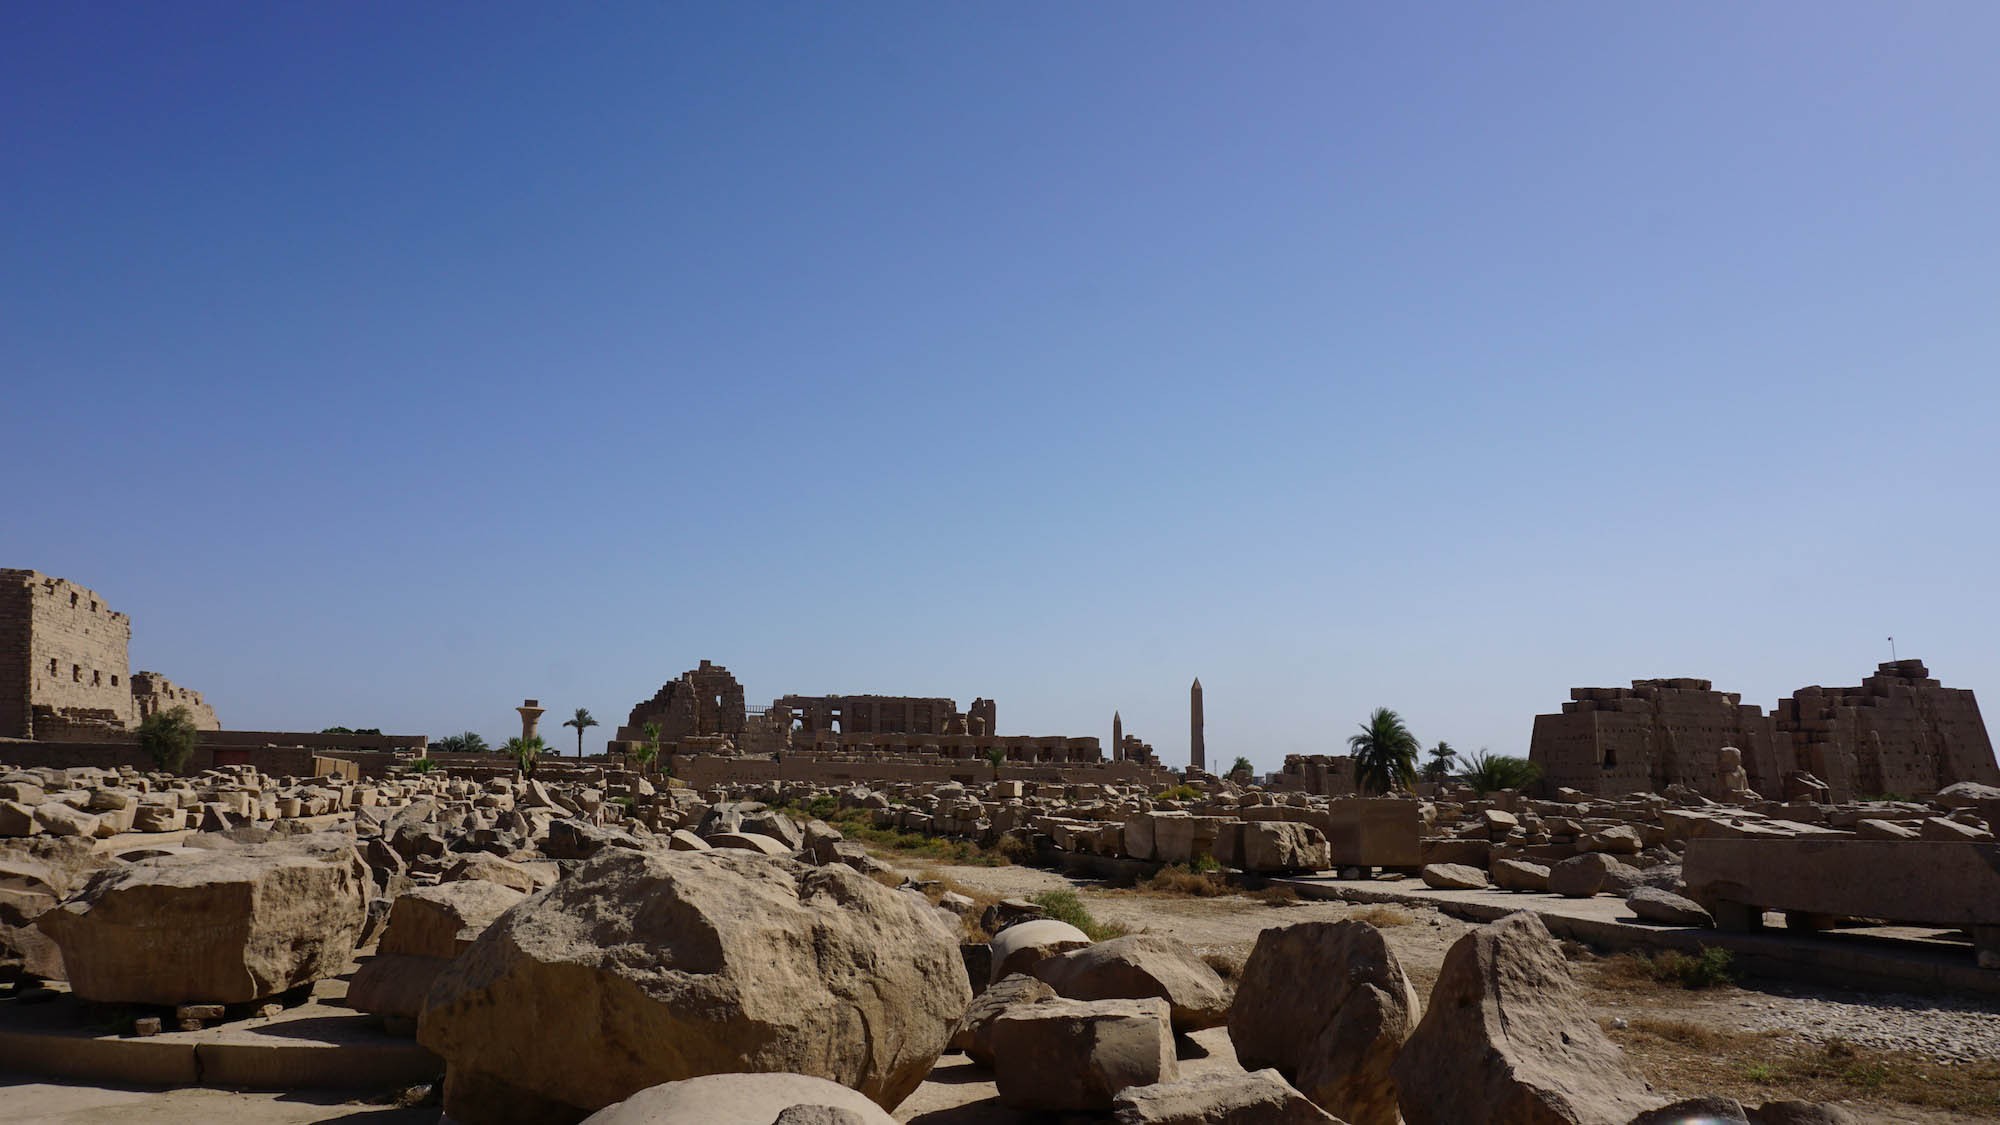 Karnak Temple后面堆着坍塌的石块，这样零碎，该如何重建？